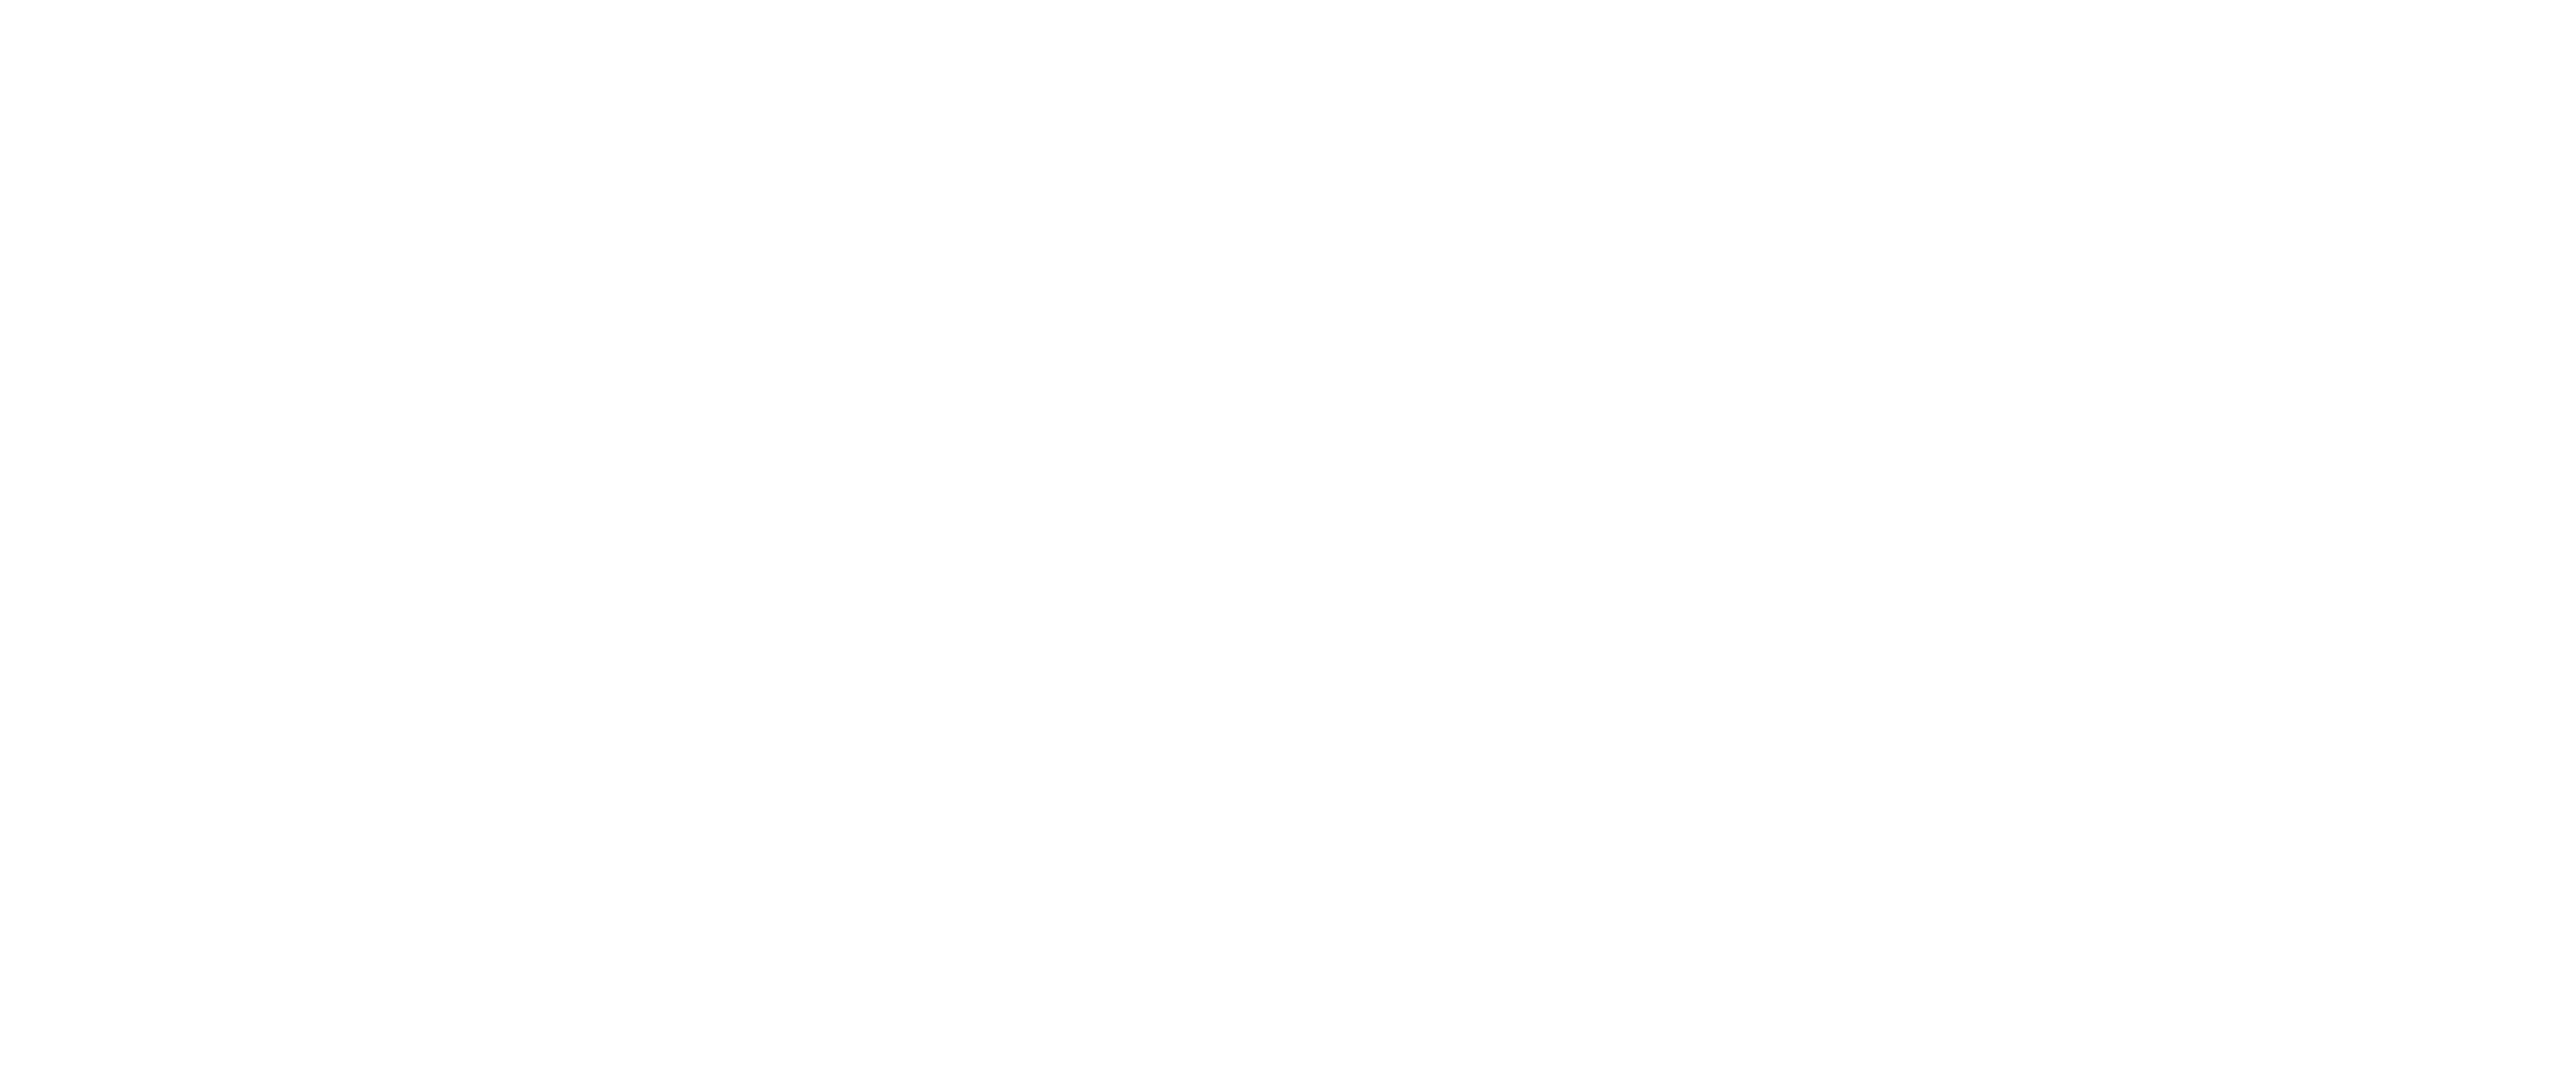 ROSbot 2 dimensions